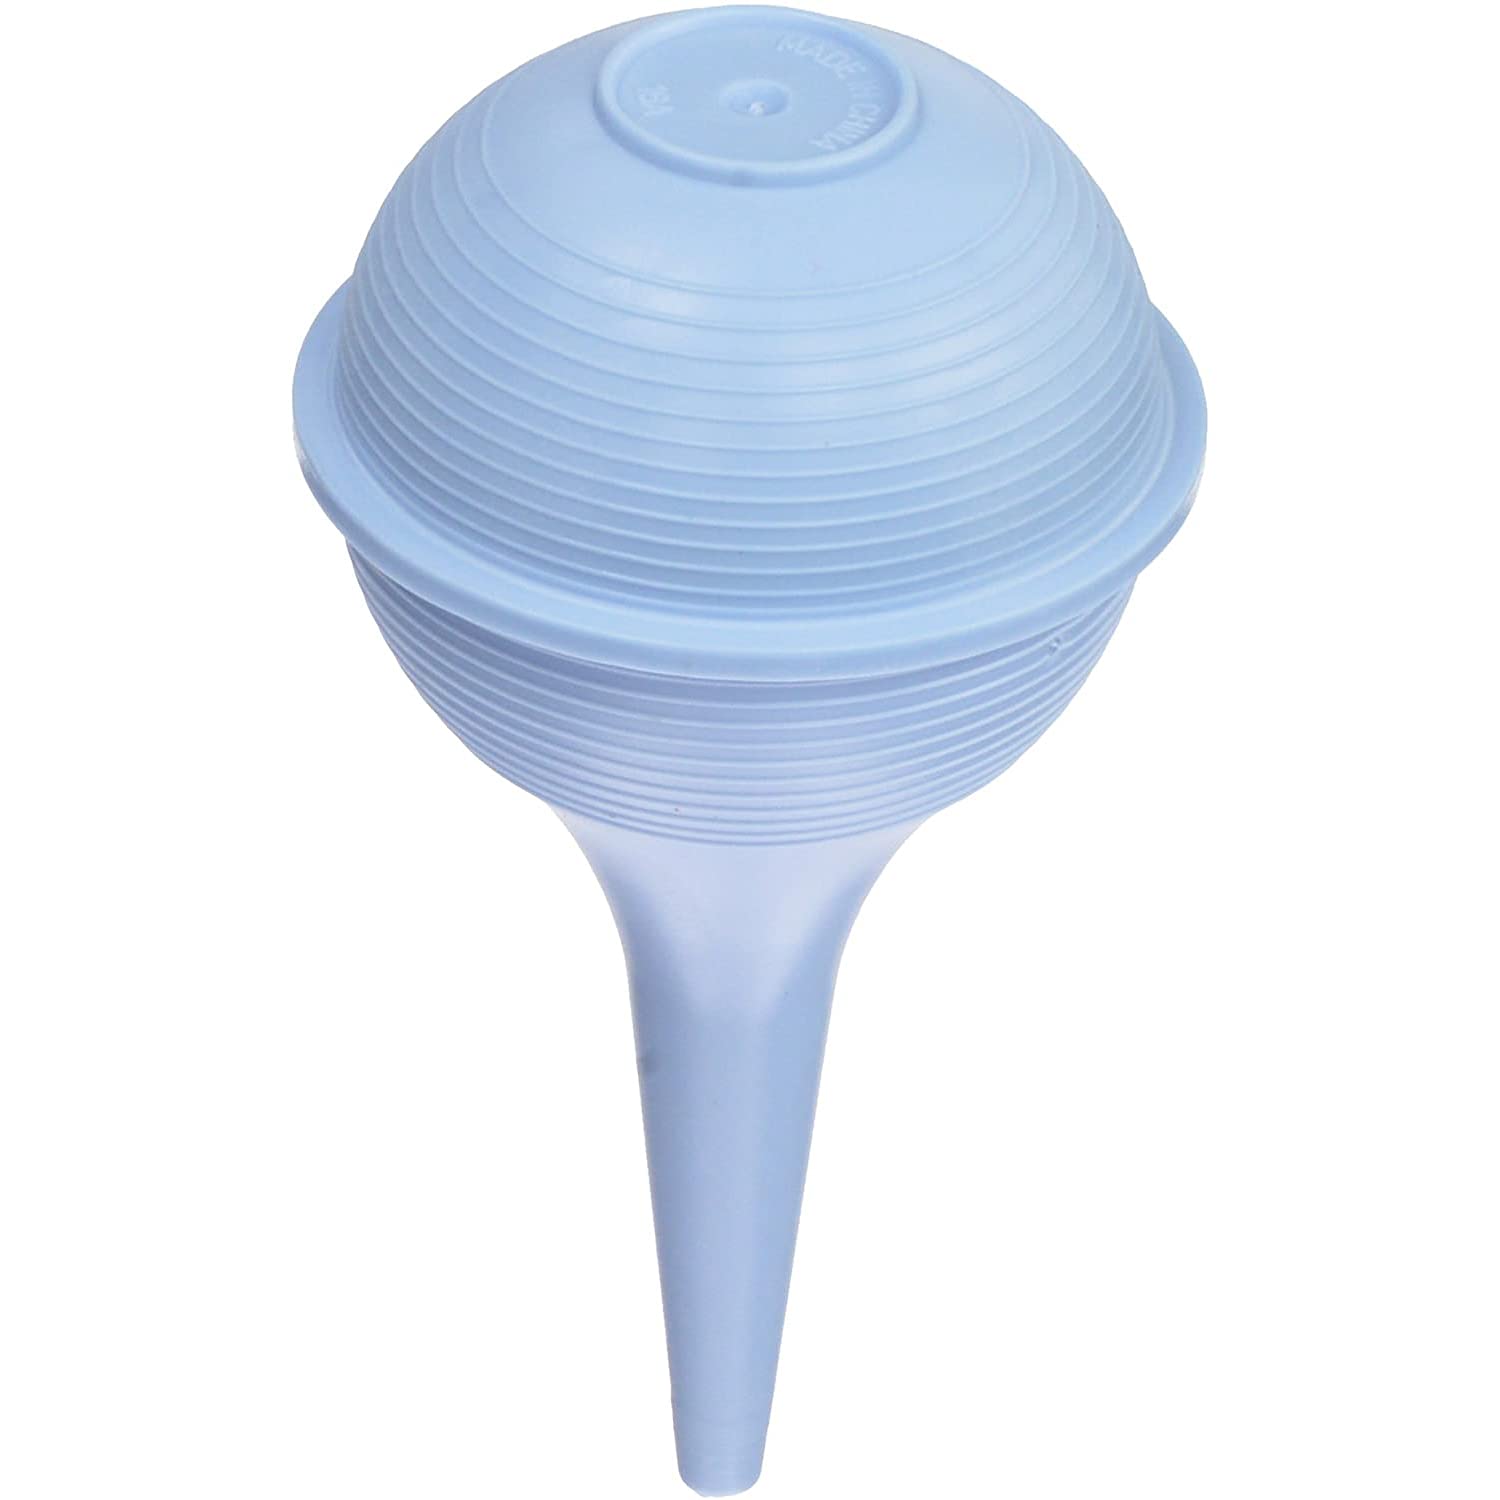 DMI Baby Nasal Aspirator, Ear Syringe, Mucus Sucker and Nasal Bulb Syringe, 2 Ounces, Blue, 1 Count (Pack of 1), (650-4004-0121)